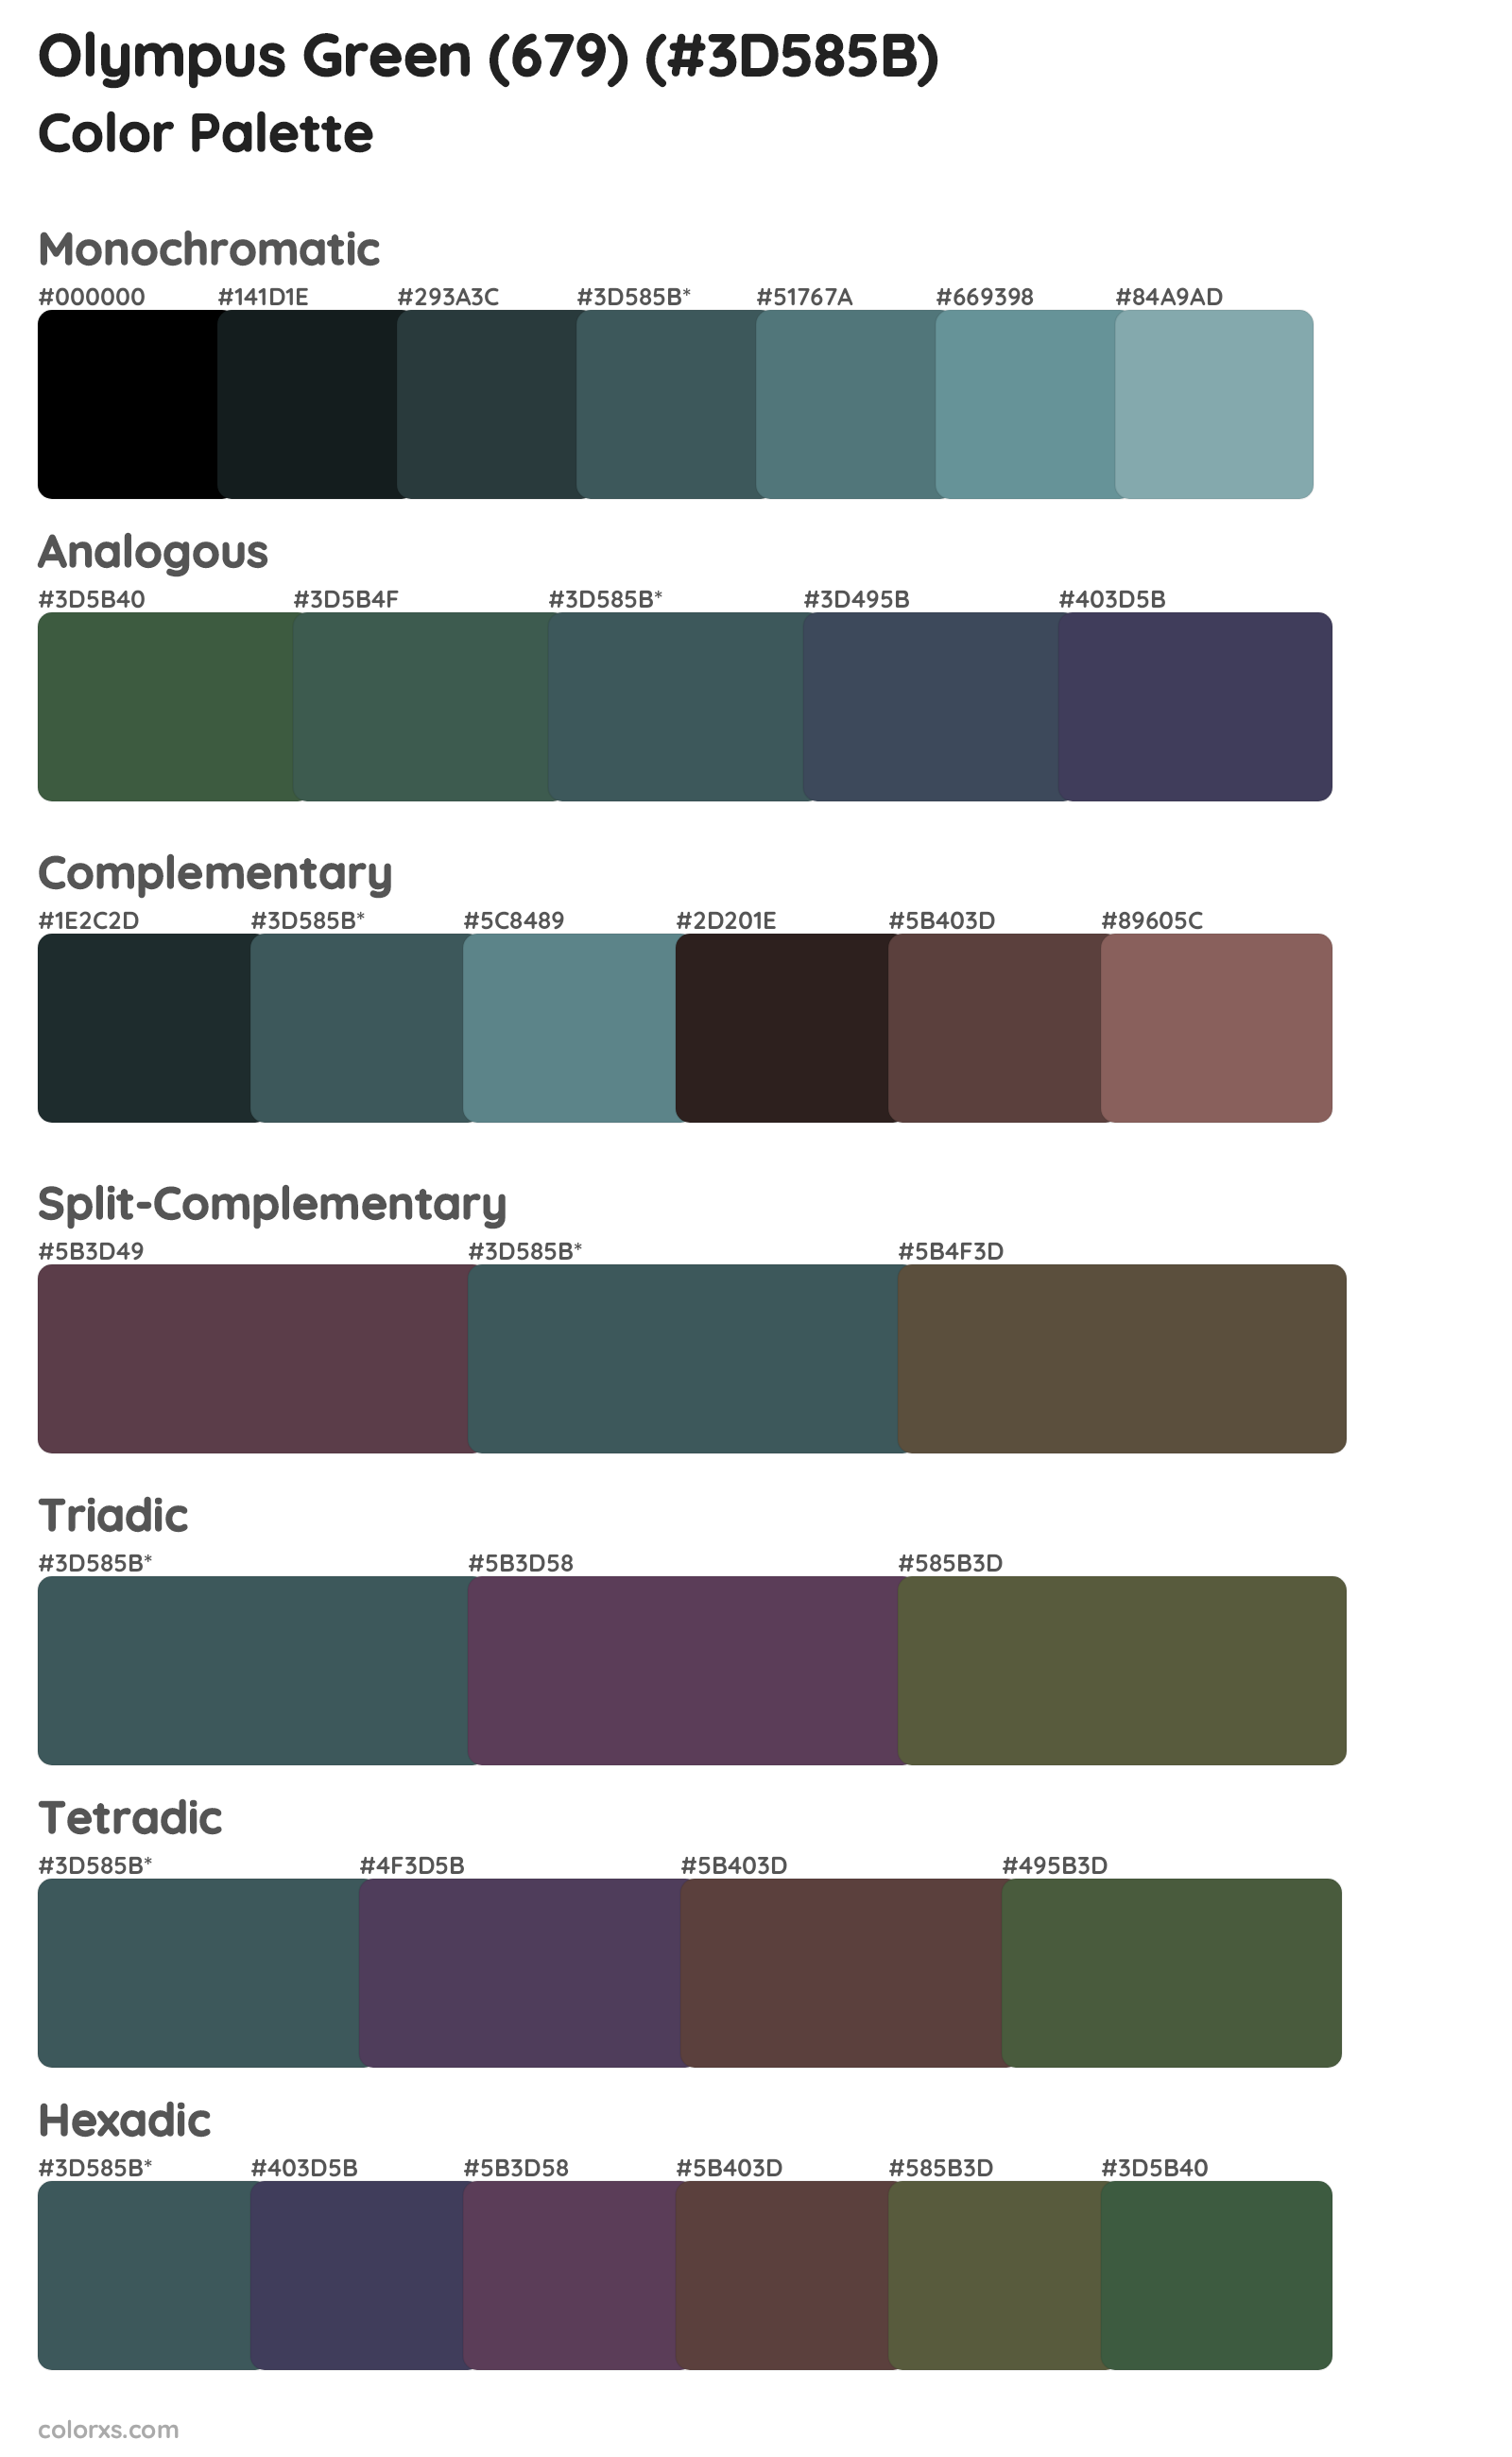 Olympus Green (679) Color Scheme Palettes